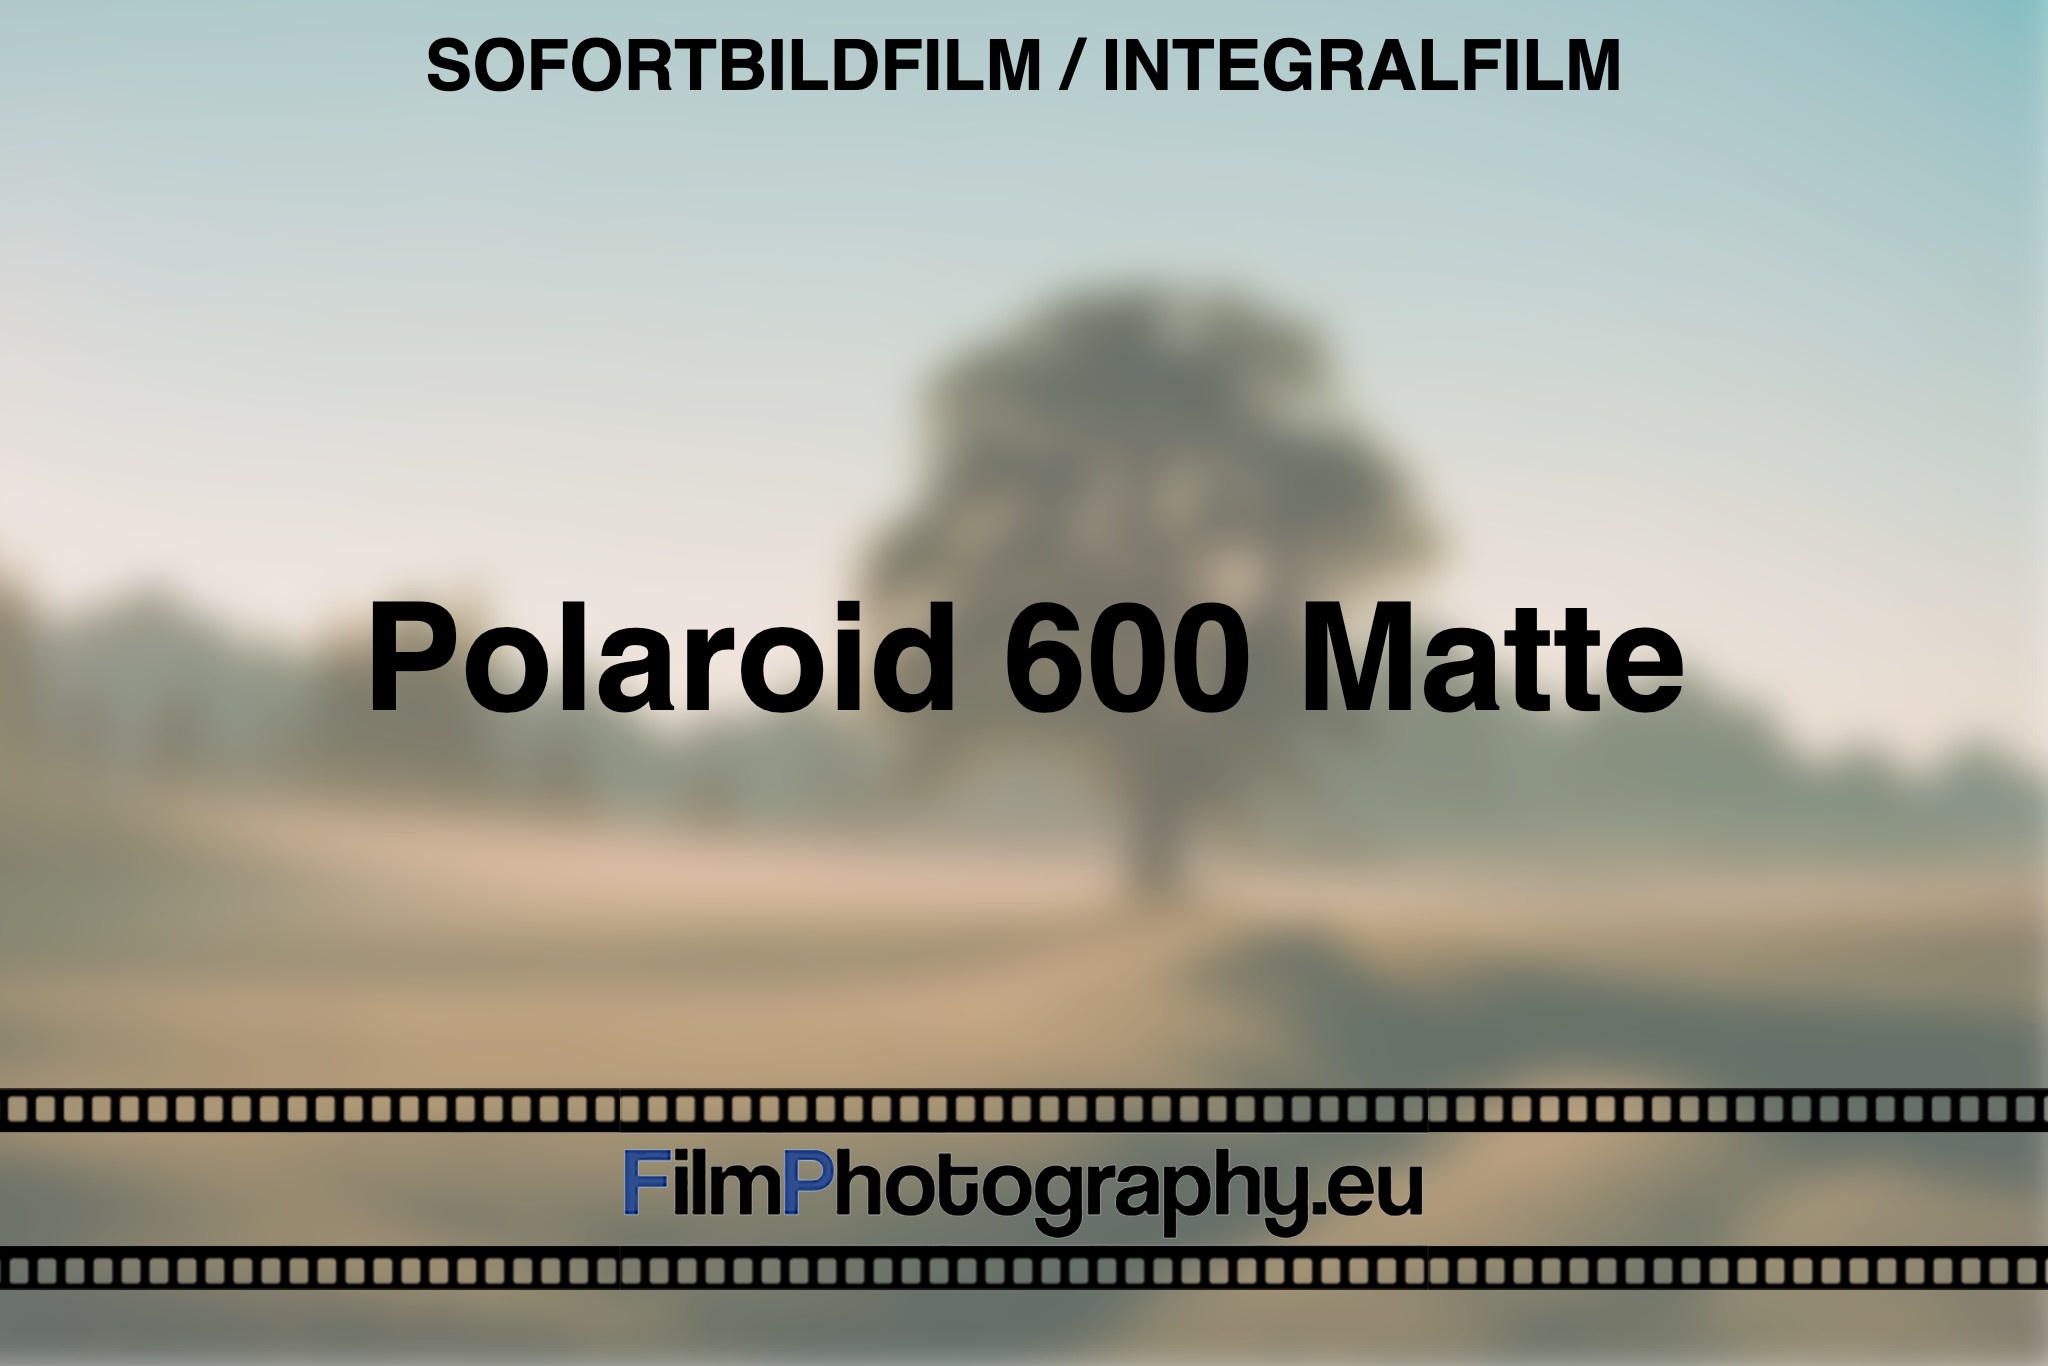 polaroid-600-matte-sofortbildfilm-integralfilm-bnv